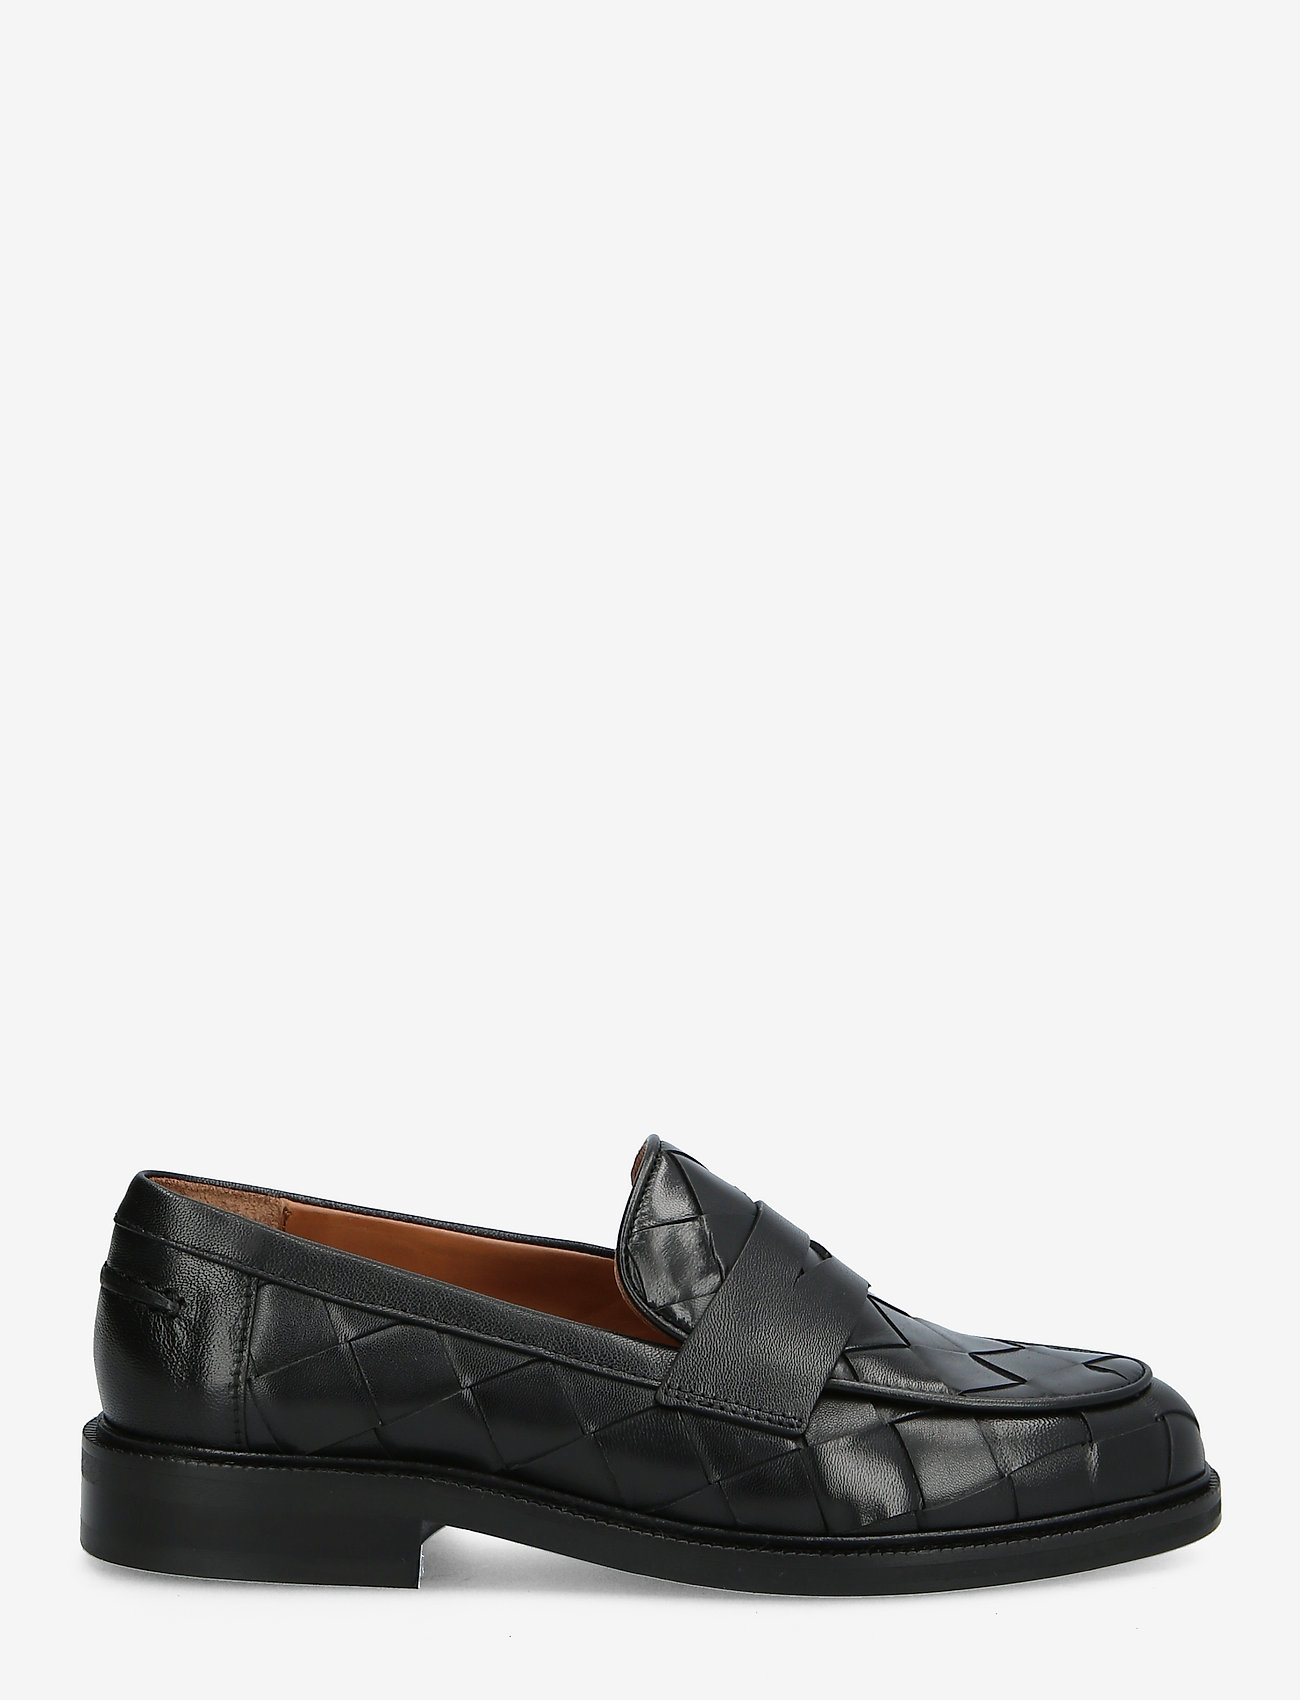 Billi Bi - Shoes - birthday gifts - black calf 80 - 1